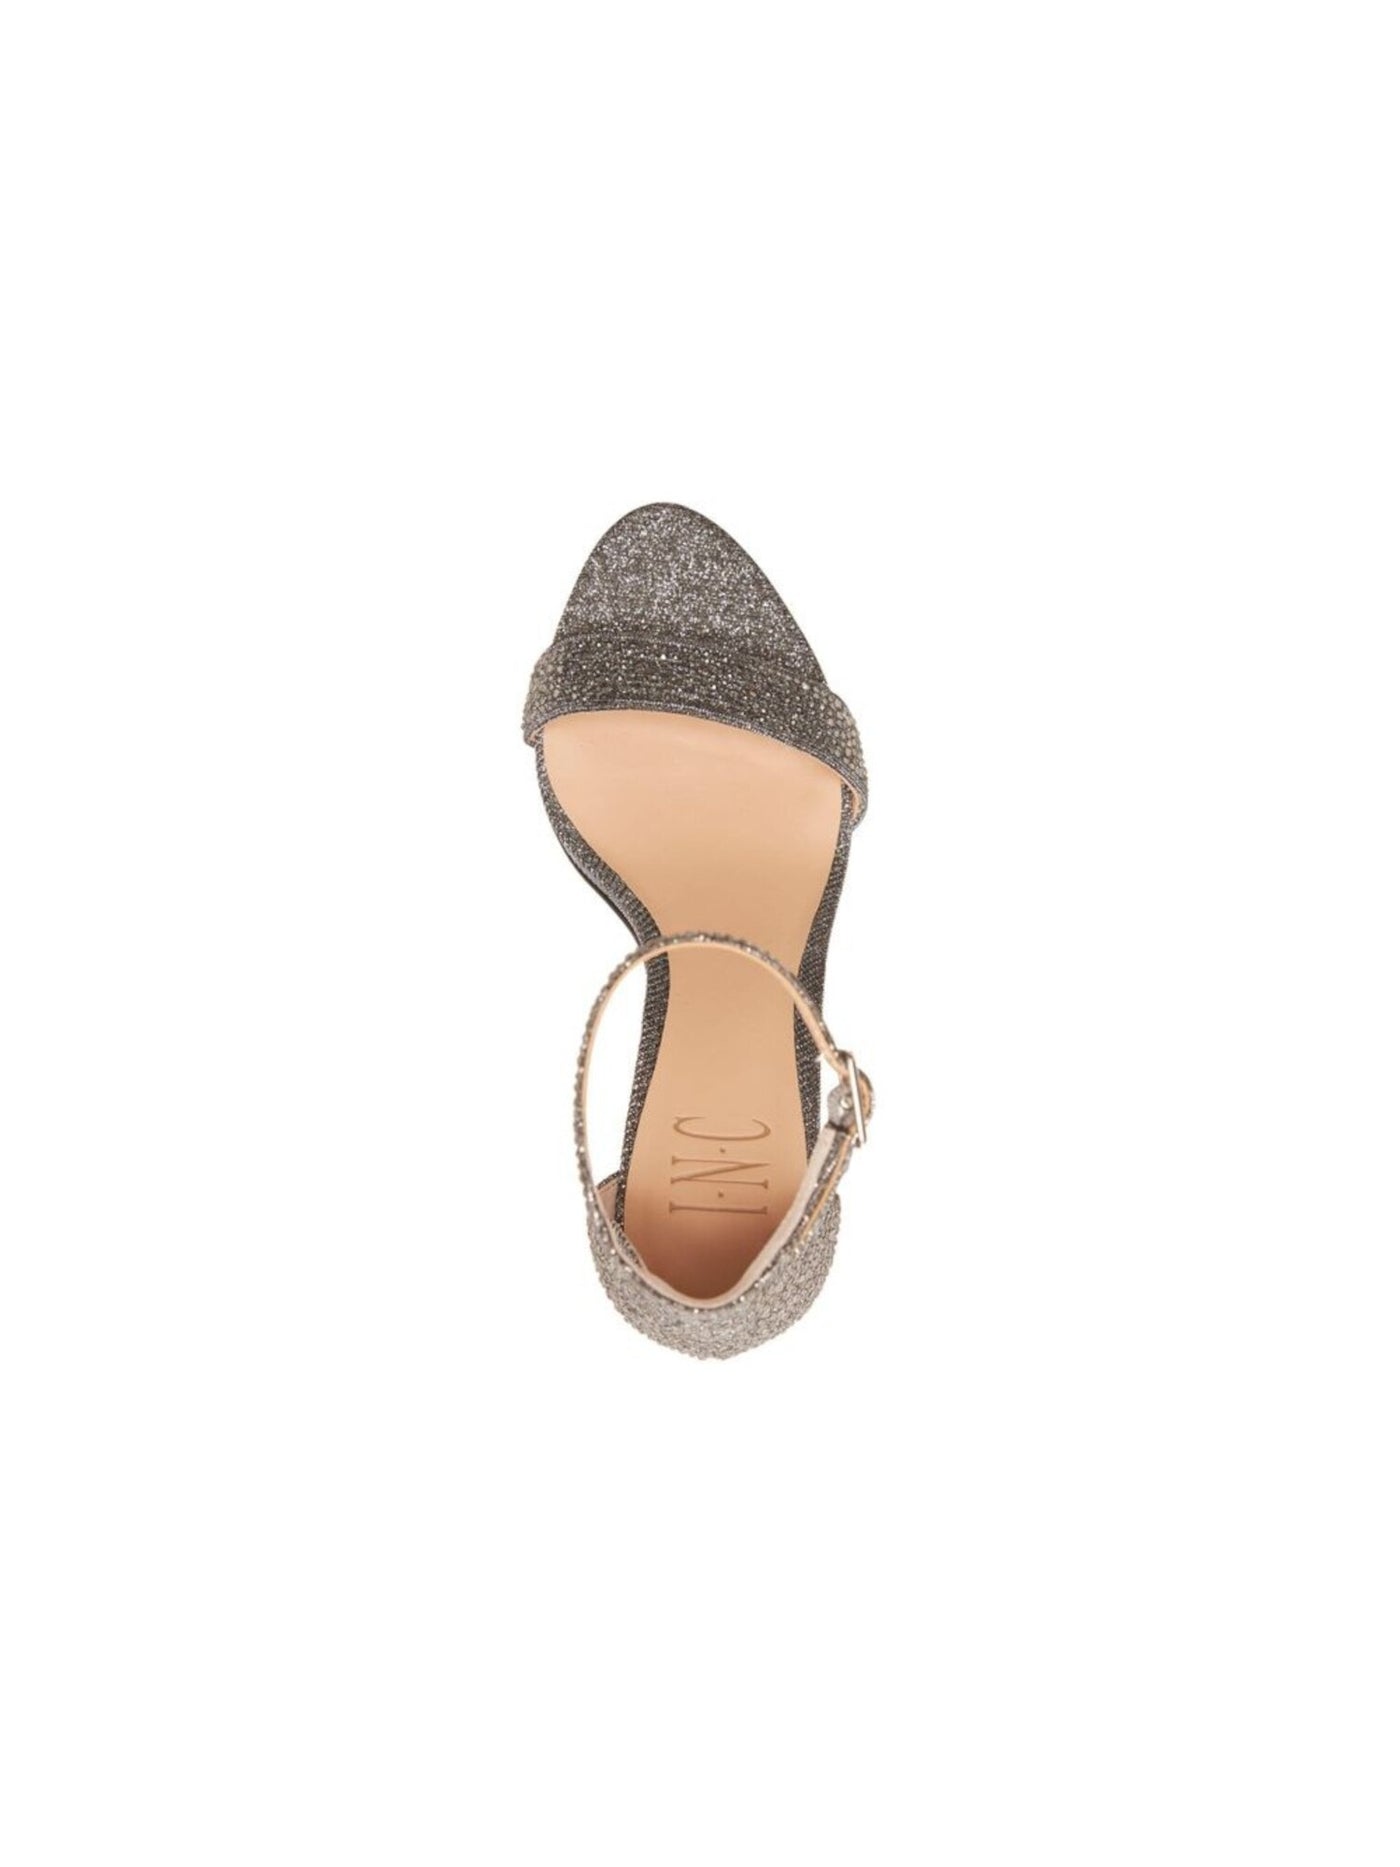 INC Womens Silver Memory Foam Ankle Strap Rhinestone Kivah Almond Toe Block Heel Buckle Dress Sandals Shoes 9 M